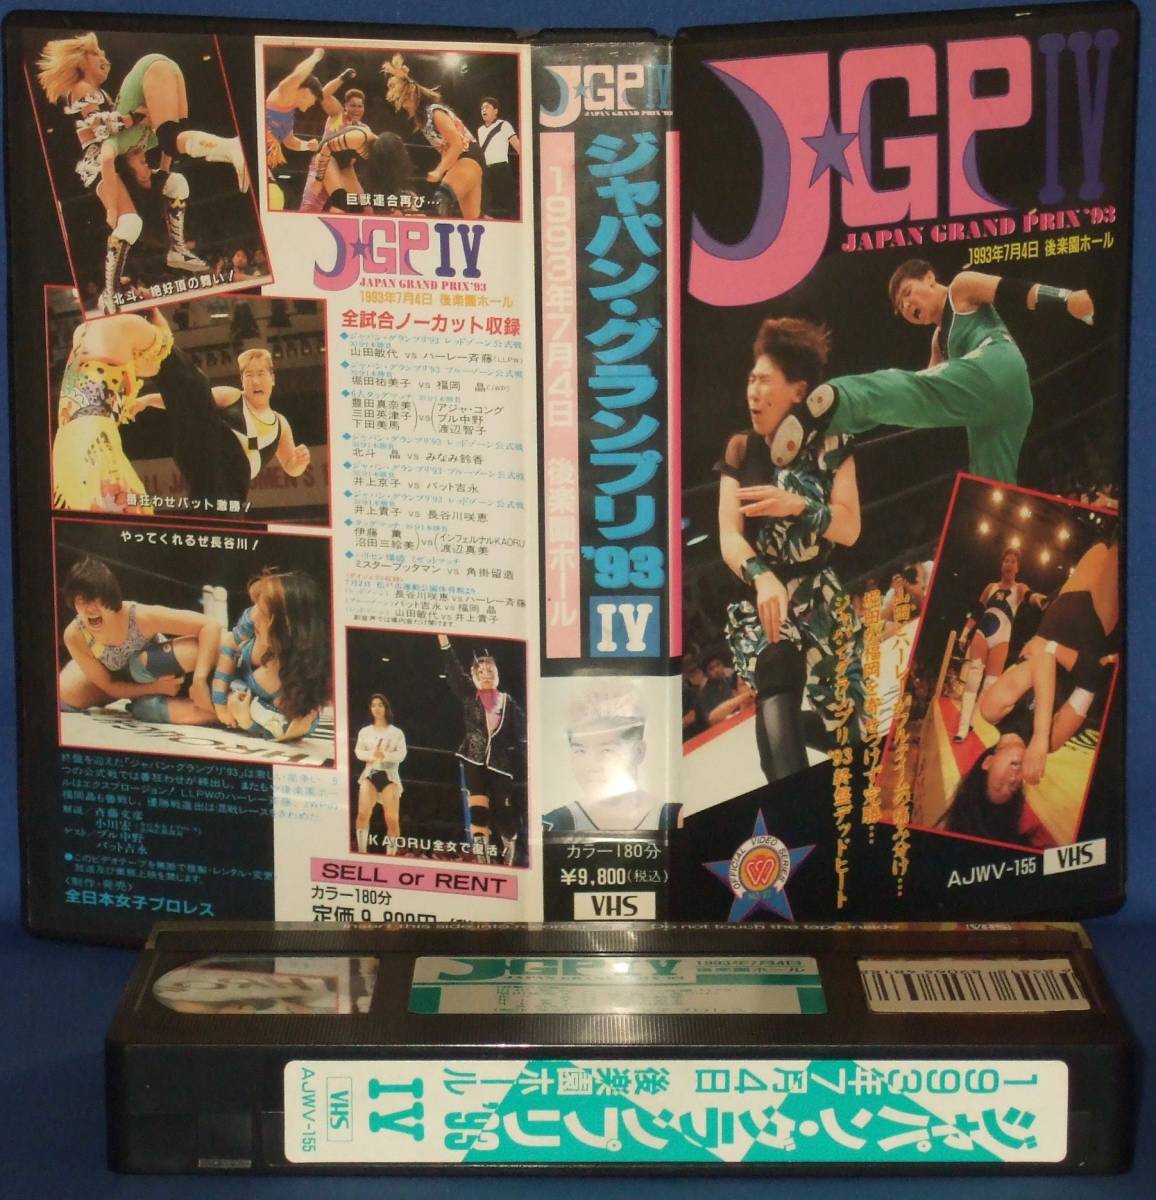 JGP4 ジャパン・グランプリ’93 4 1993.7.4 後楽園ホール [VHS]